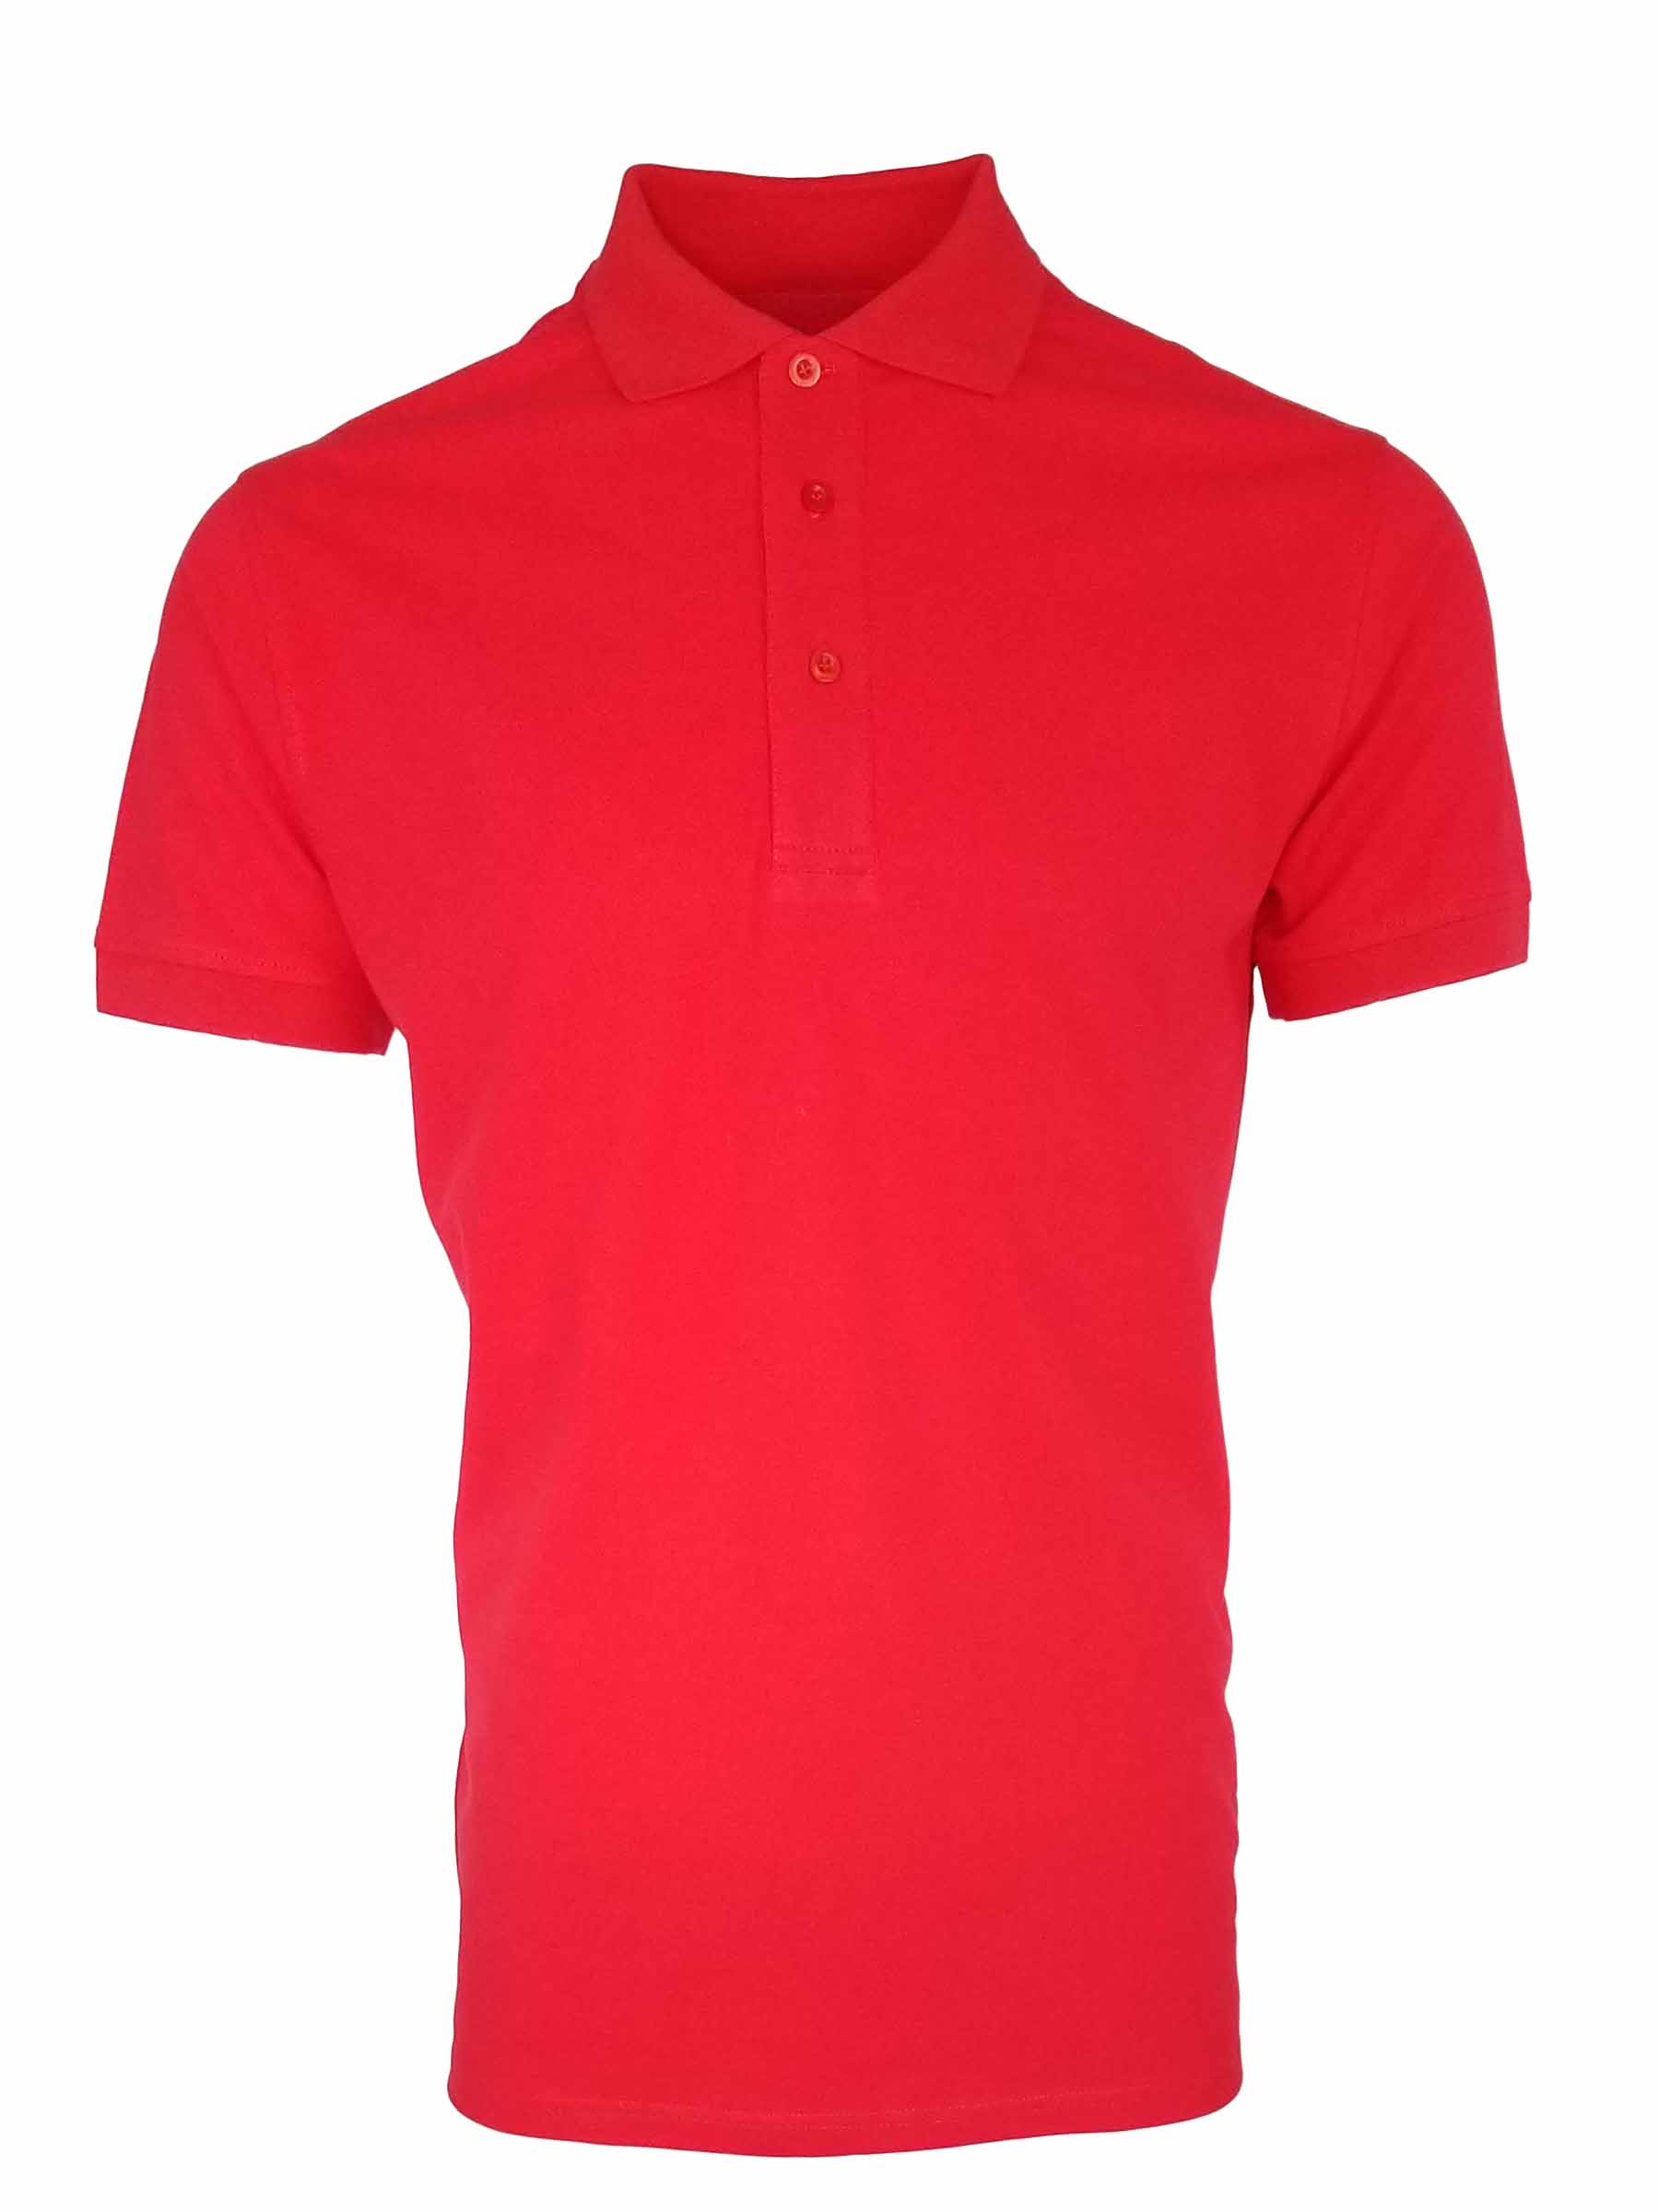 Men's All Occasion Pique Polo - Red - Uniform Edit